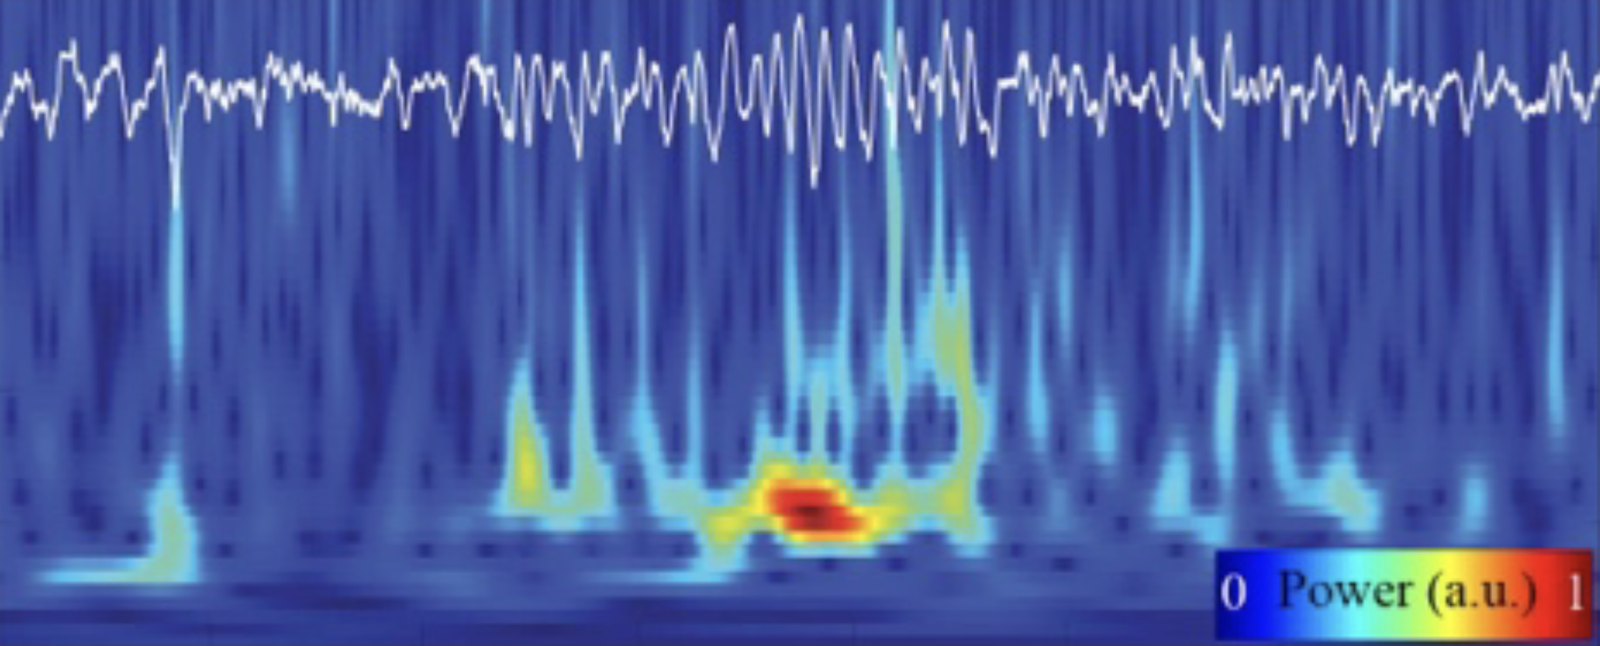 trace recordings of brain activity